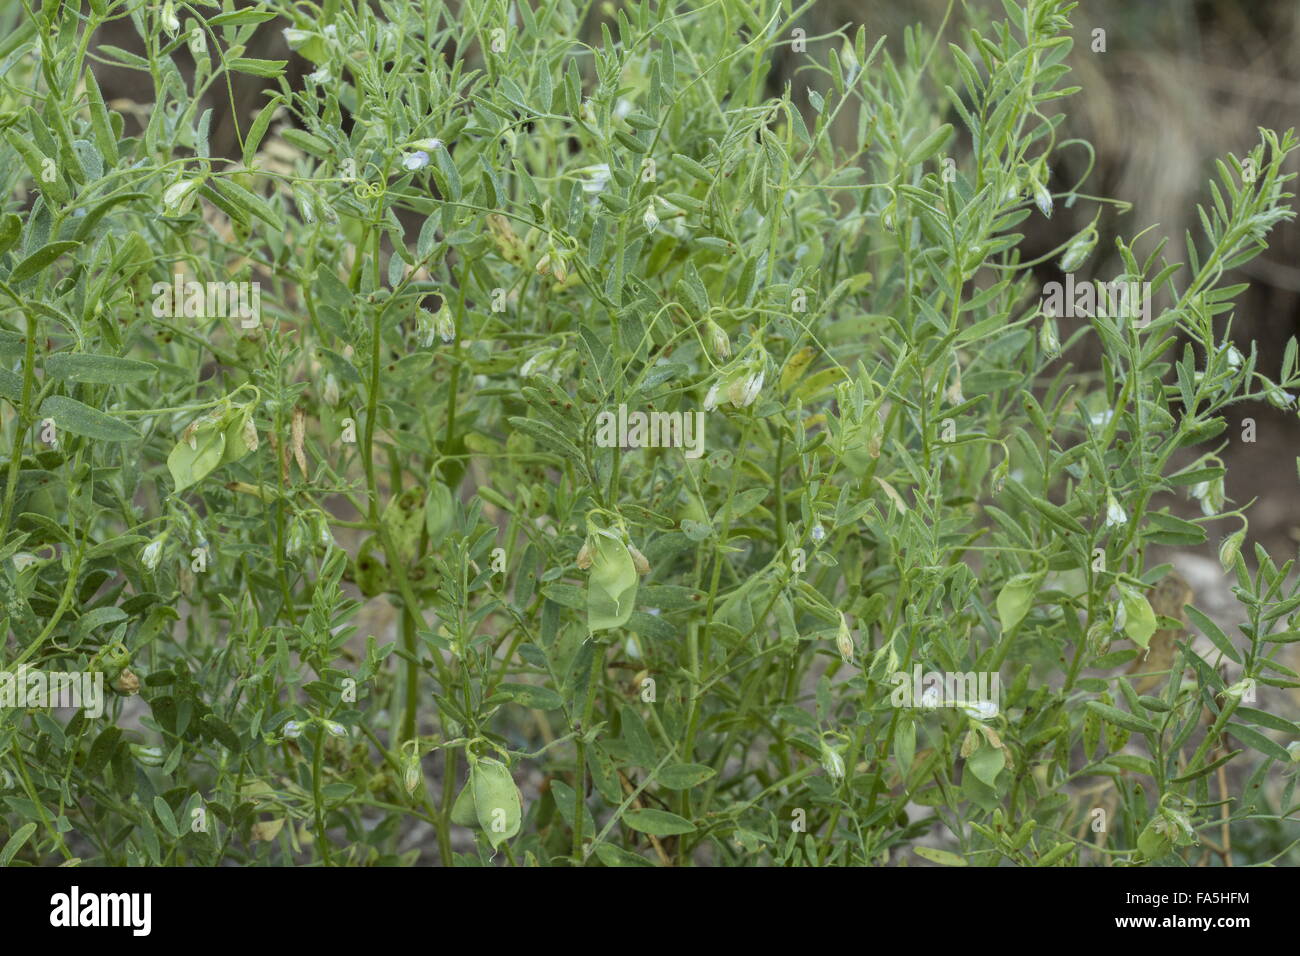 Lentil crop, Lens culinaris, in Monti Sibillini National Park, Umbria, Italy Stock Photo